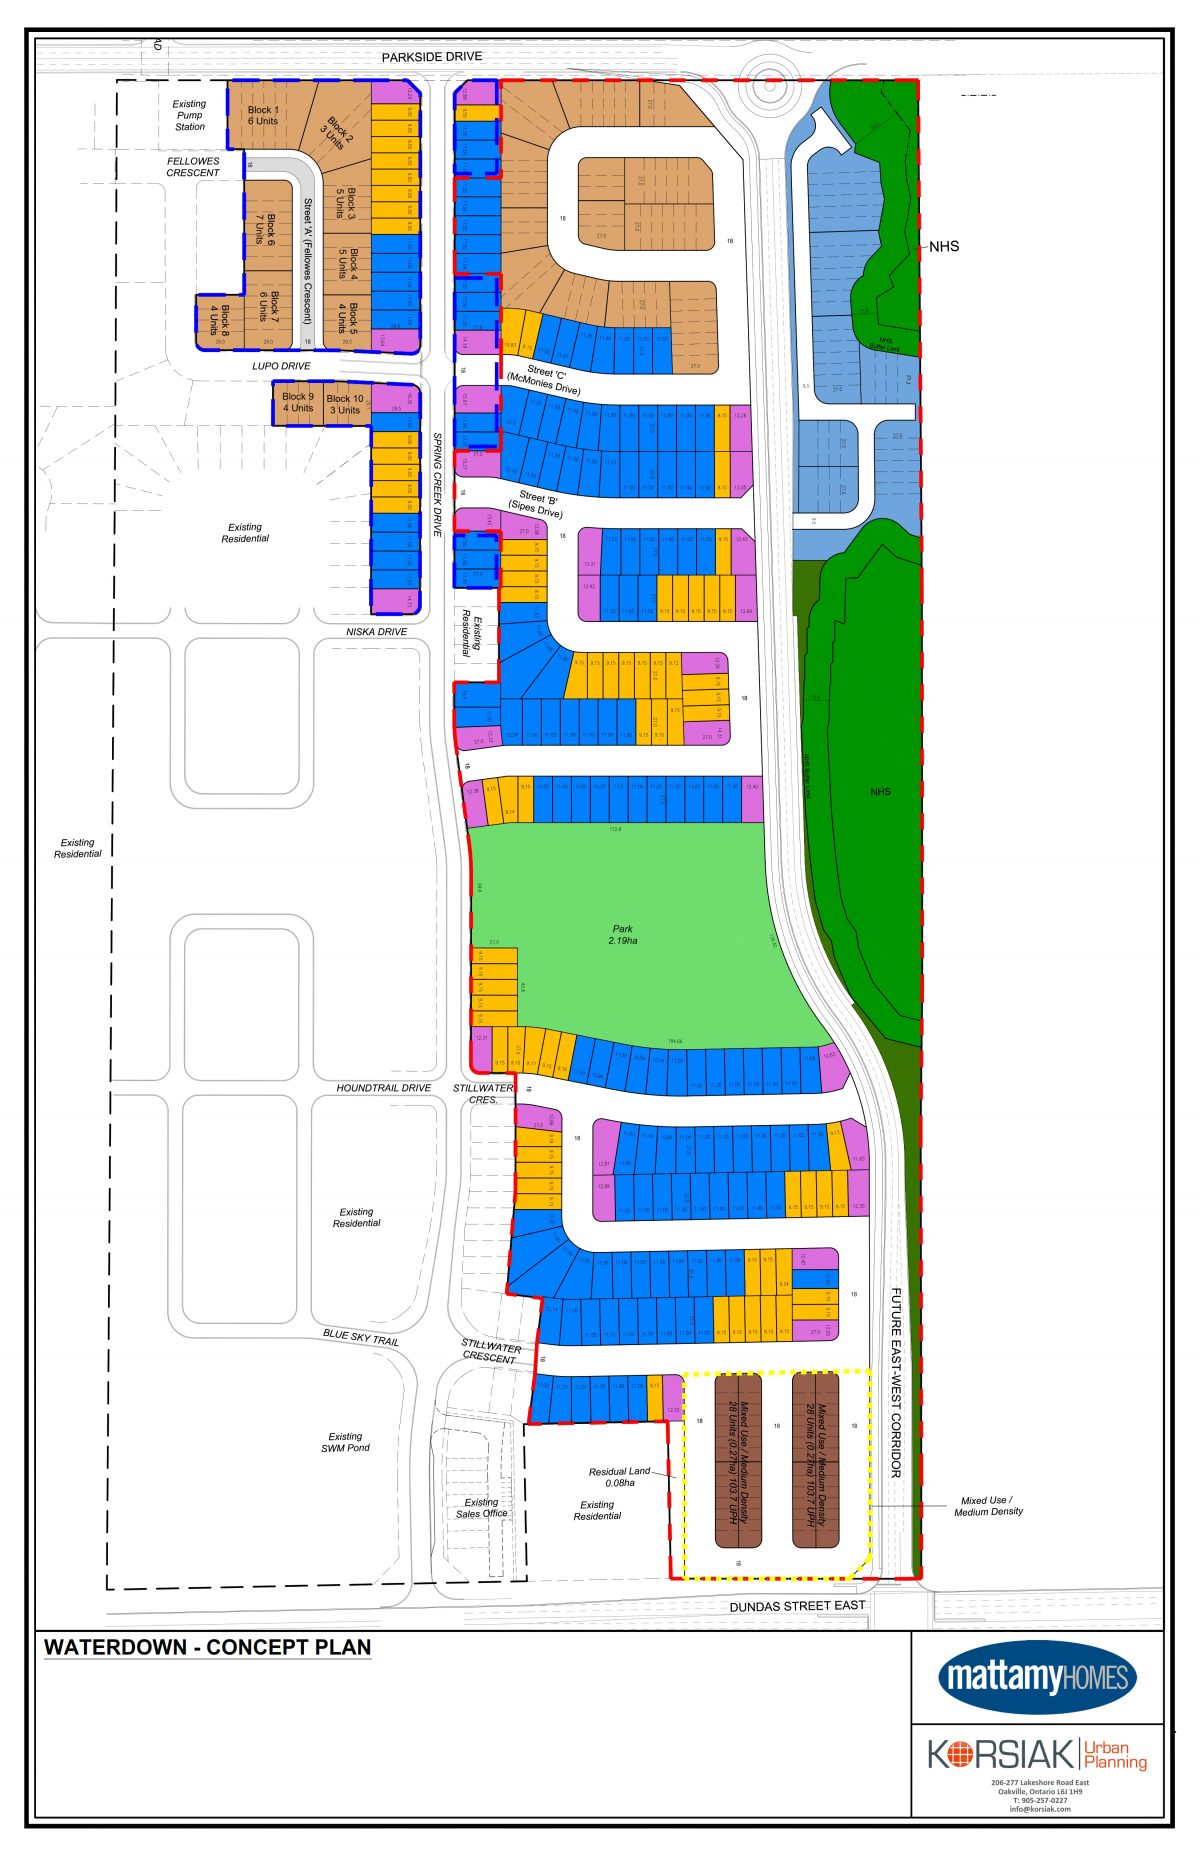 Korsiak Urban Planning - Hamilton Portfolio - Dundas Street East, Greenfield Development - Hamilton, Ontario